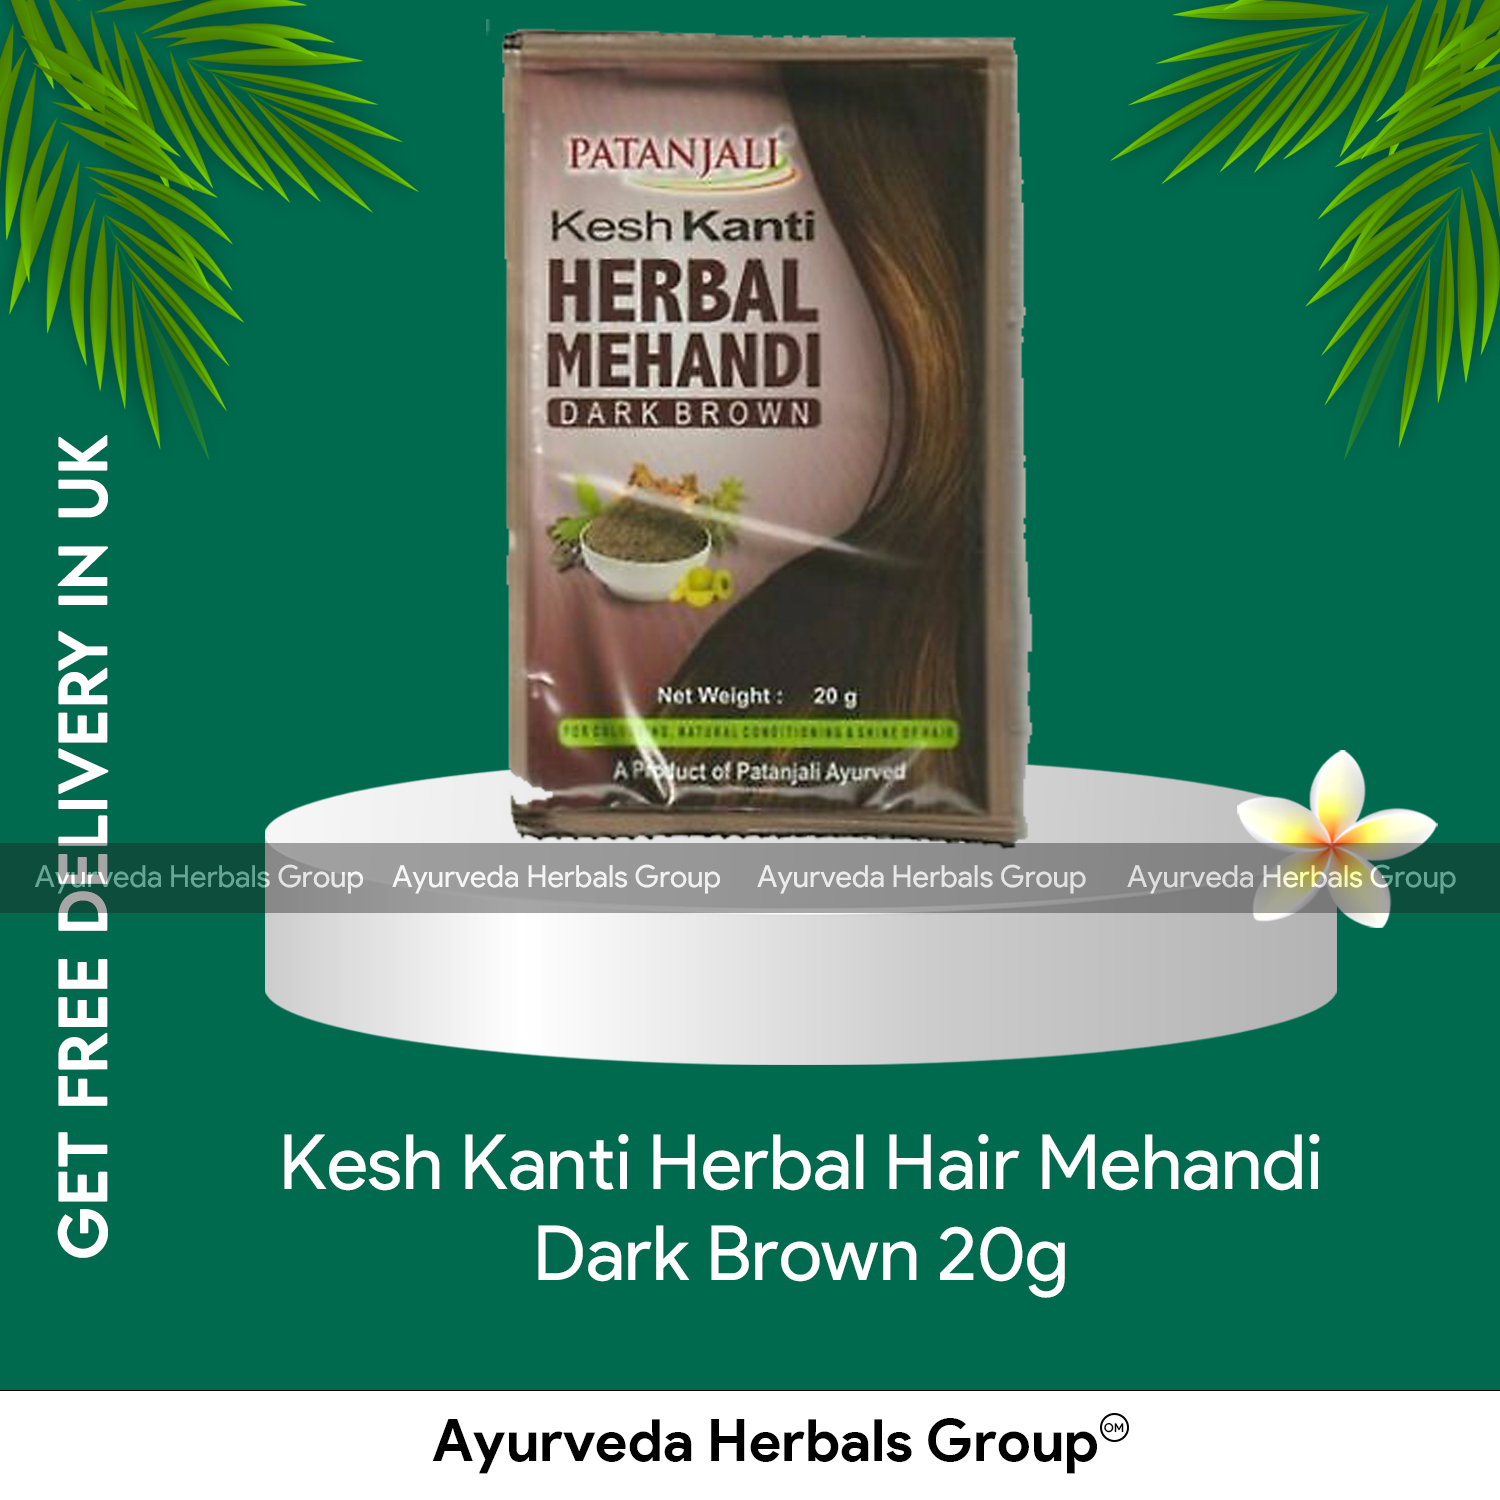 Khadi Natural nut brown henna hair colour review | RARA | mehndi paste for  dark brown color - YouTube